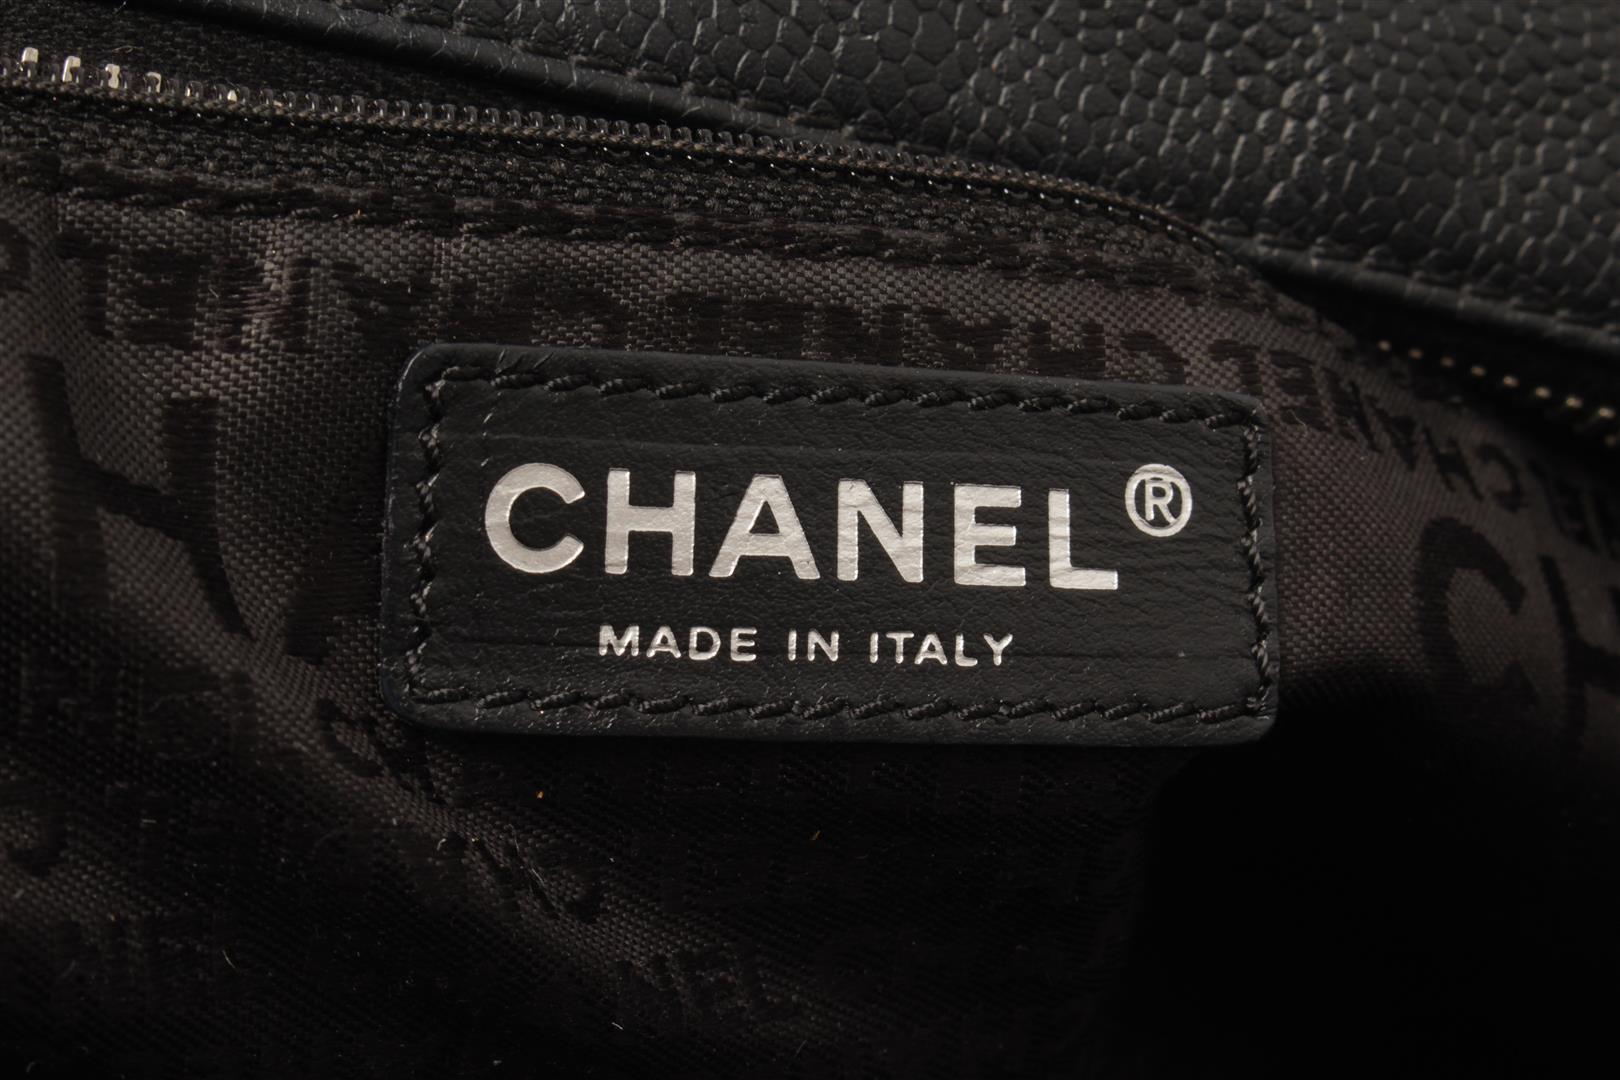 Chanel Black Leather Mesh CC Tote Bag